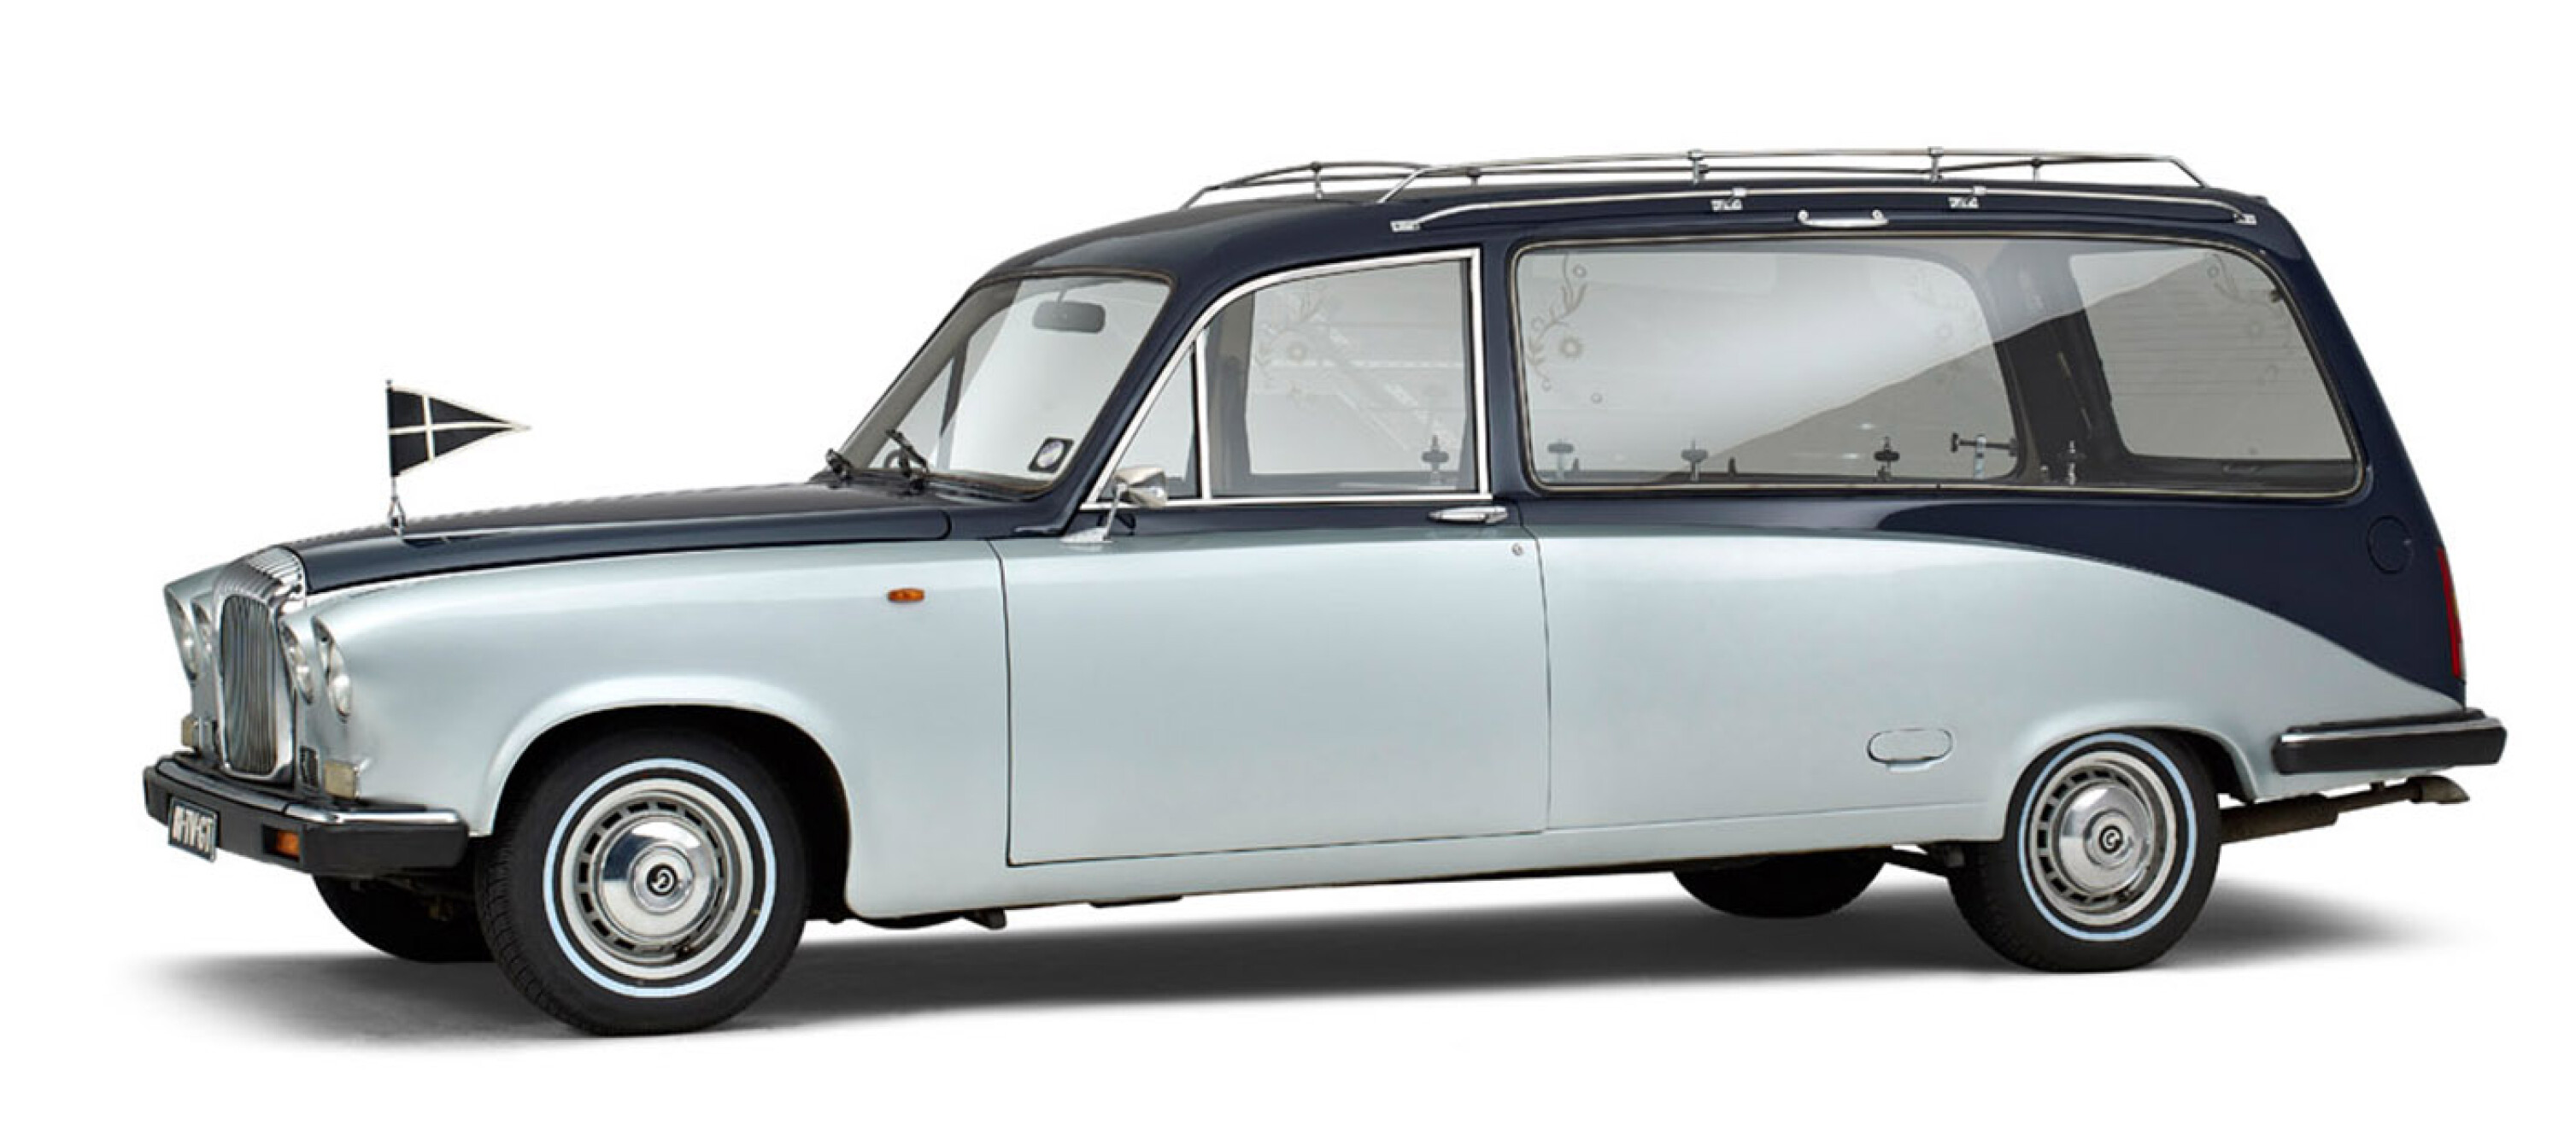 Daimler-two-tone-Glas-rouwauto.jpg